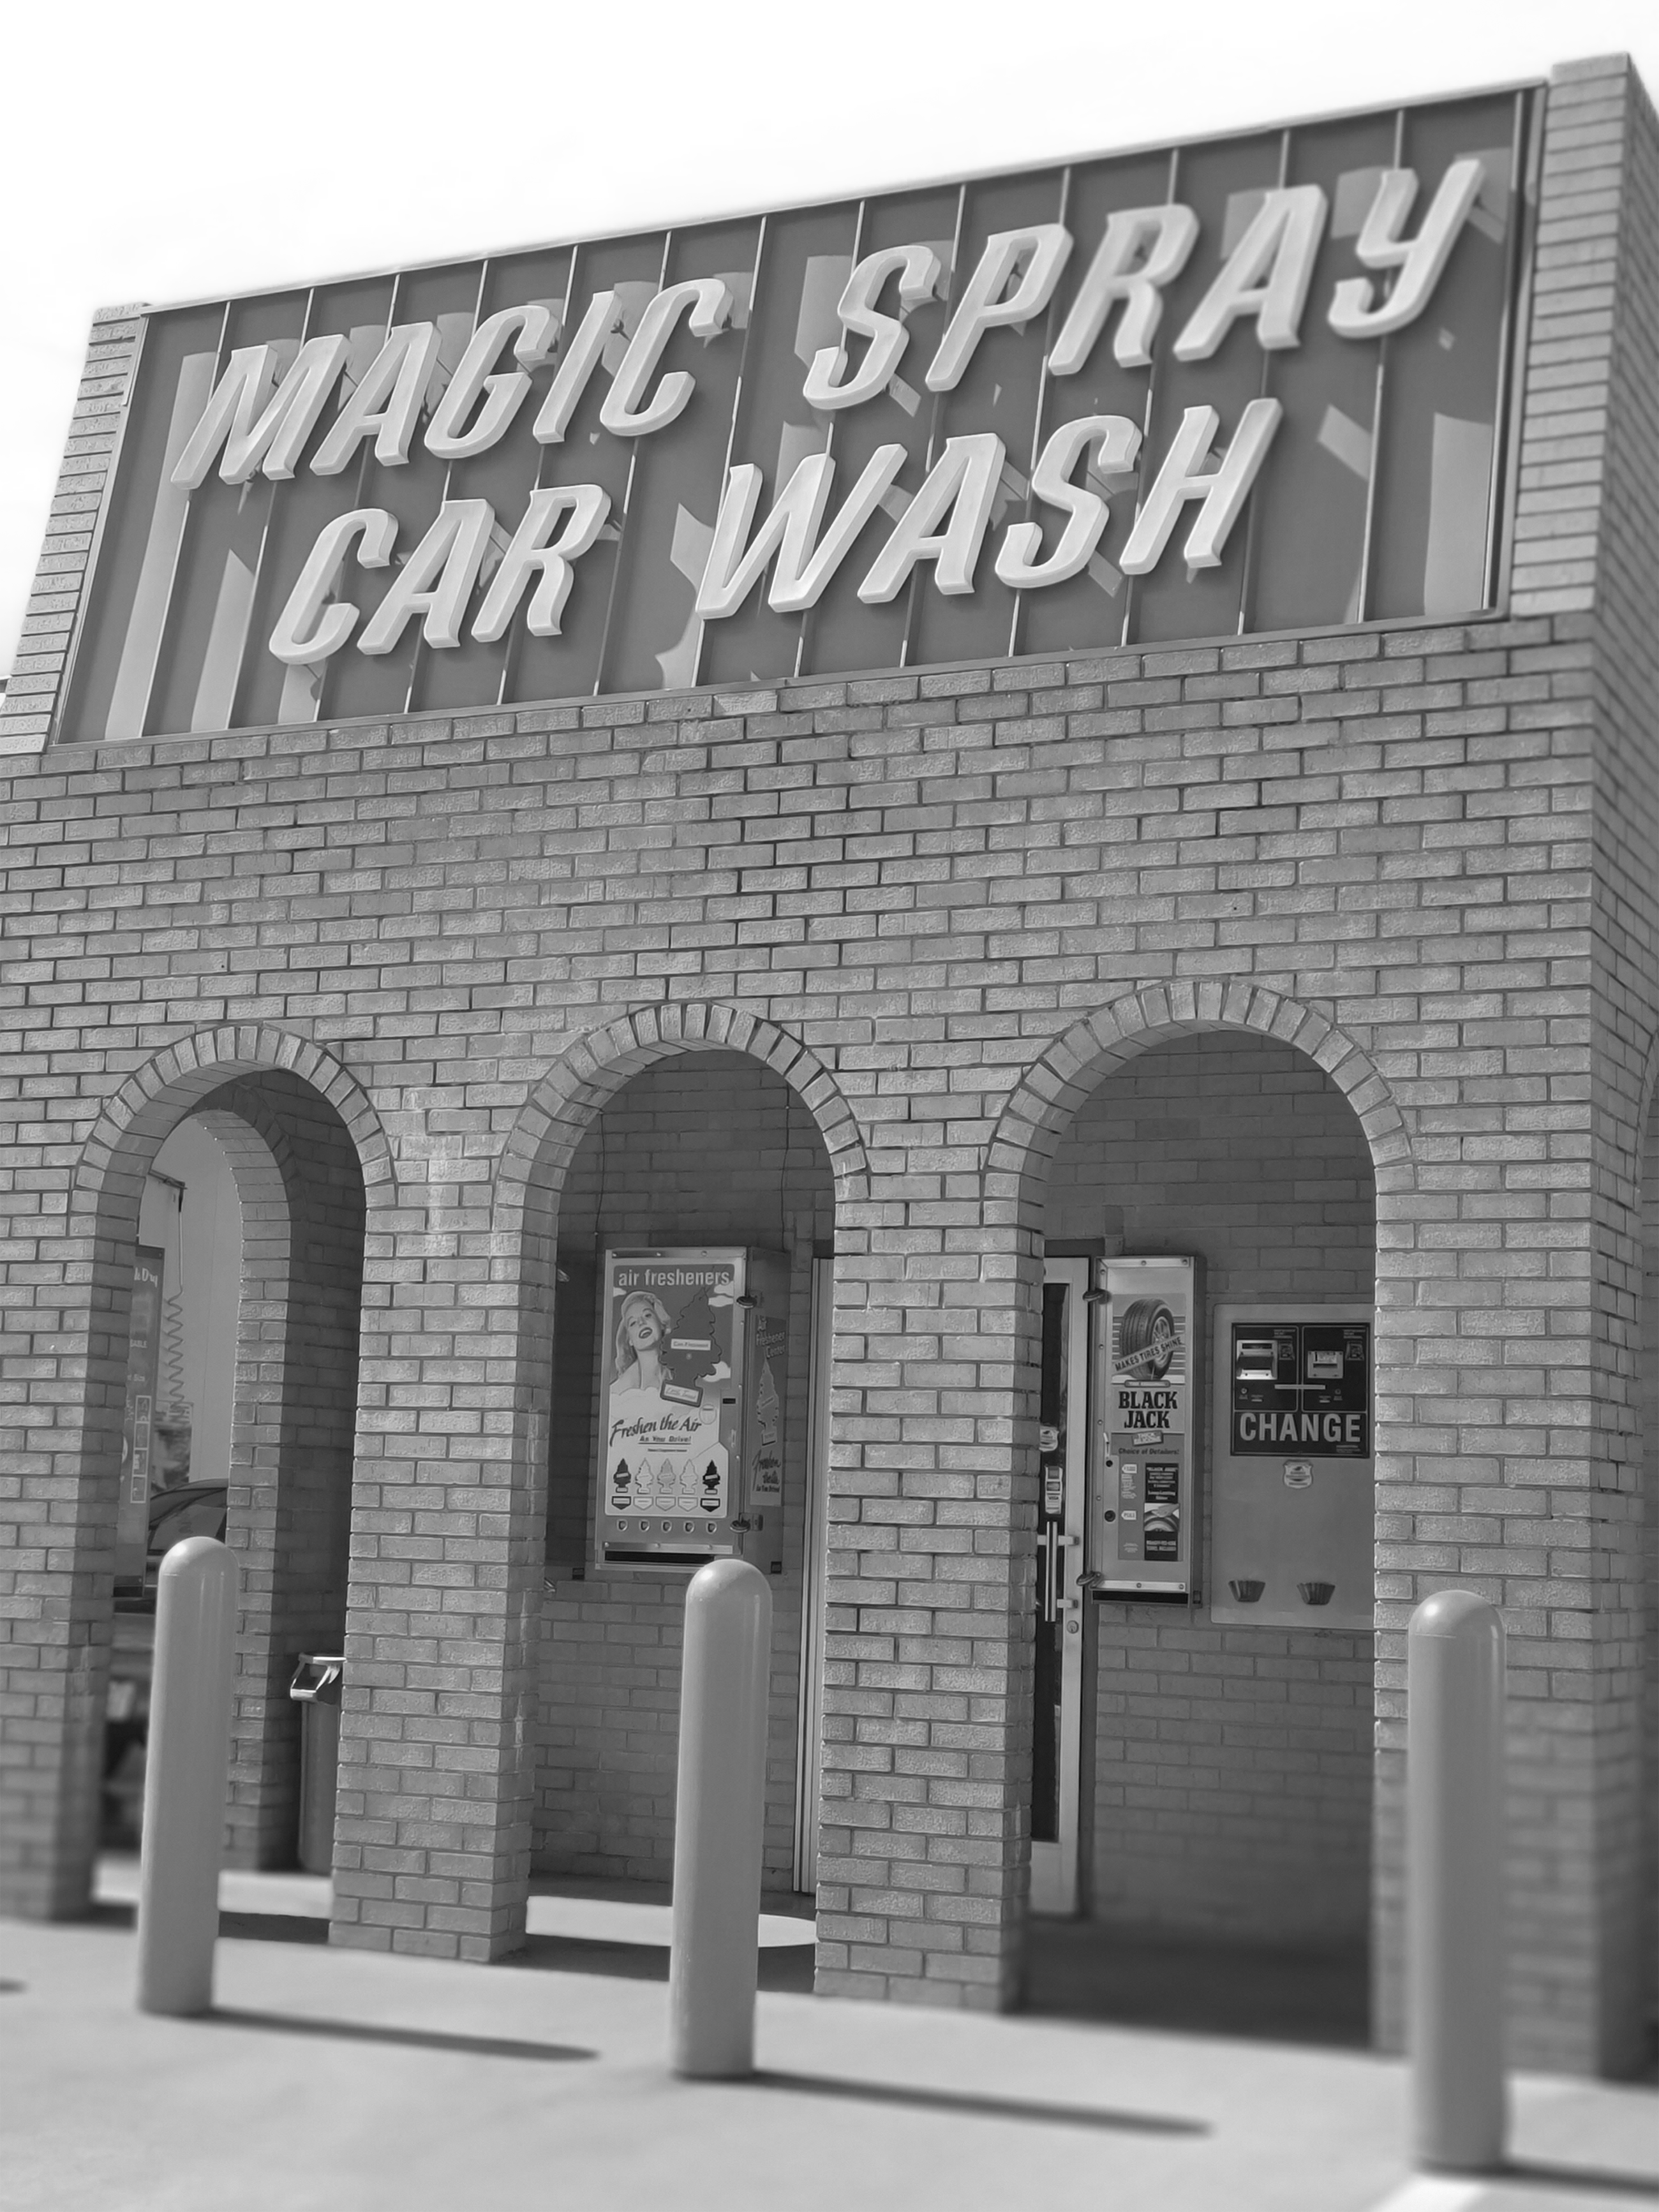 Magic Spray Car Wash